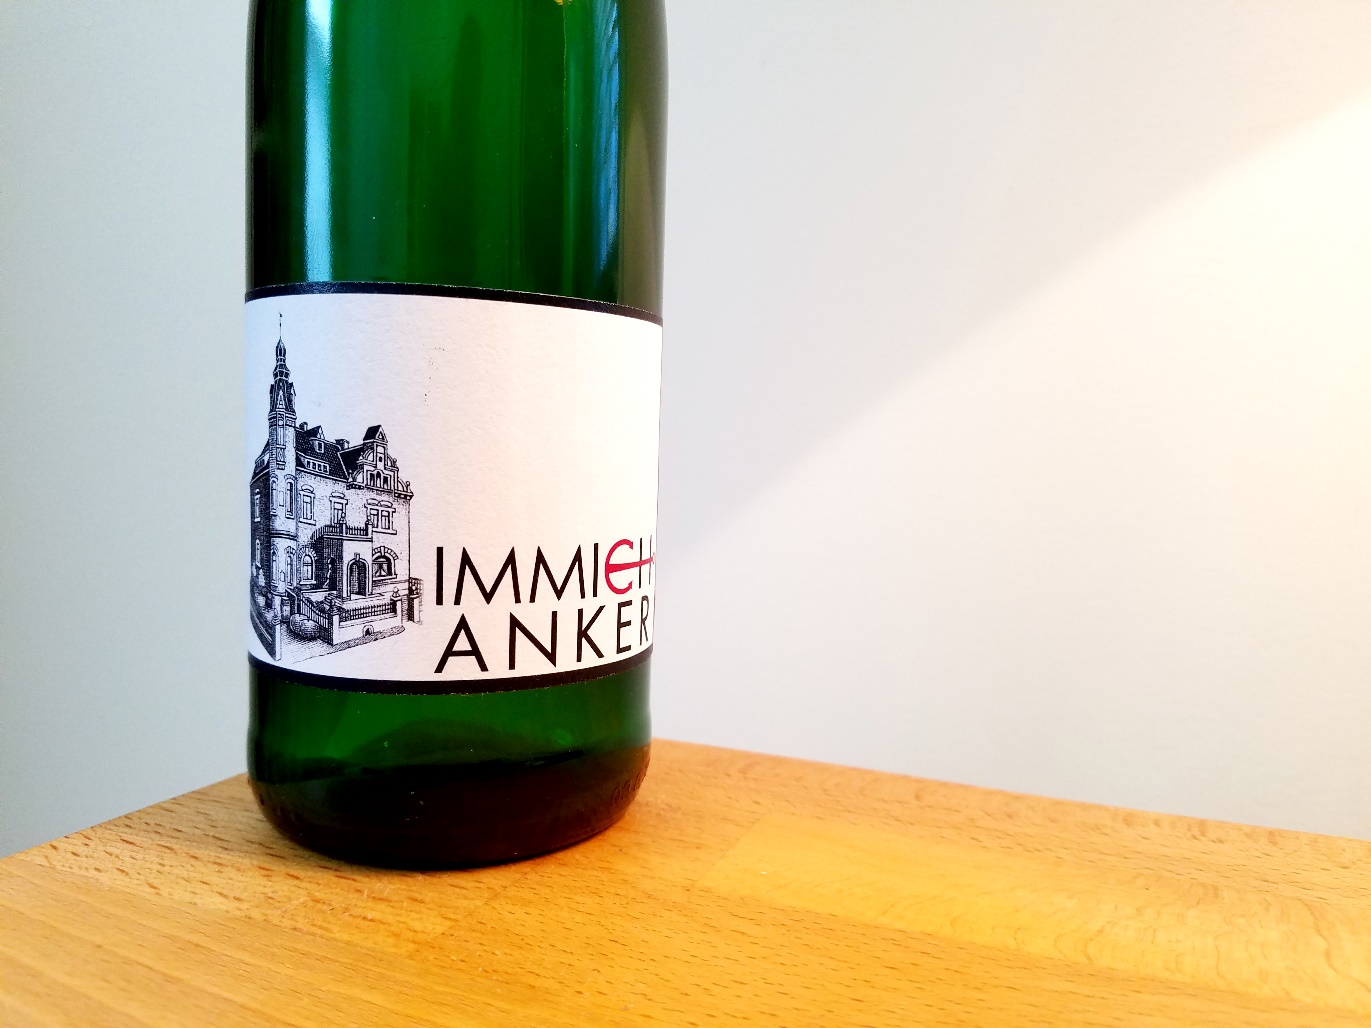 Immich Anker, Enkircher Herrenberg Riesling Spätlese 2017, Mosel, Germany, Wine Casual